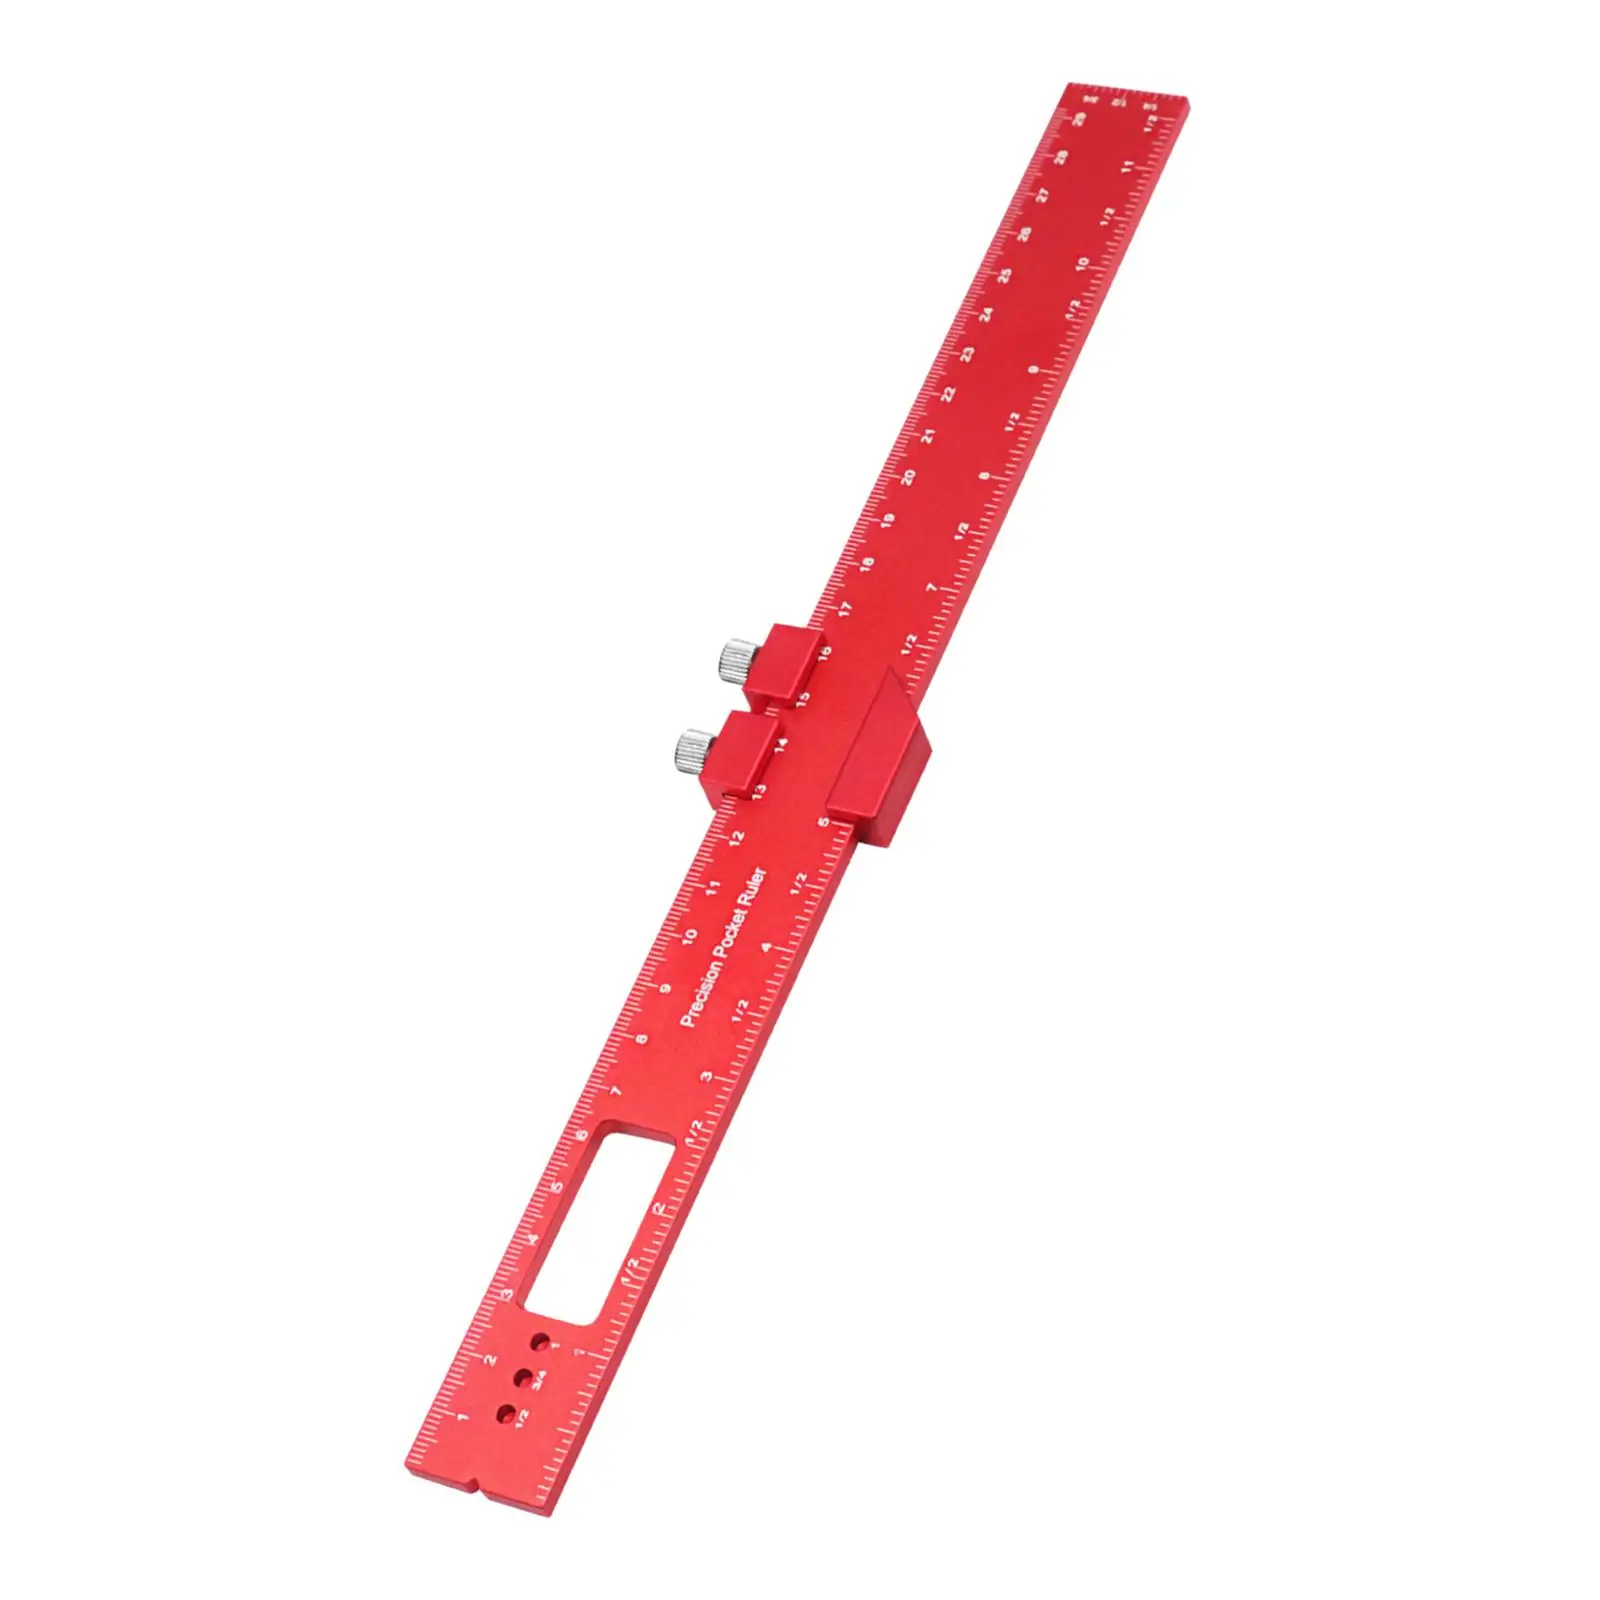 Aluminum Pocket Ruler Scribing Ruler 45 Degree Sliding Sturdy Lightweight Marking Measuring Ruler inch and Metric